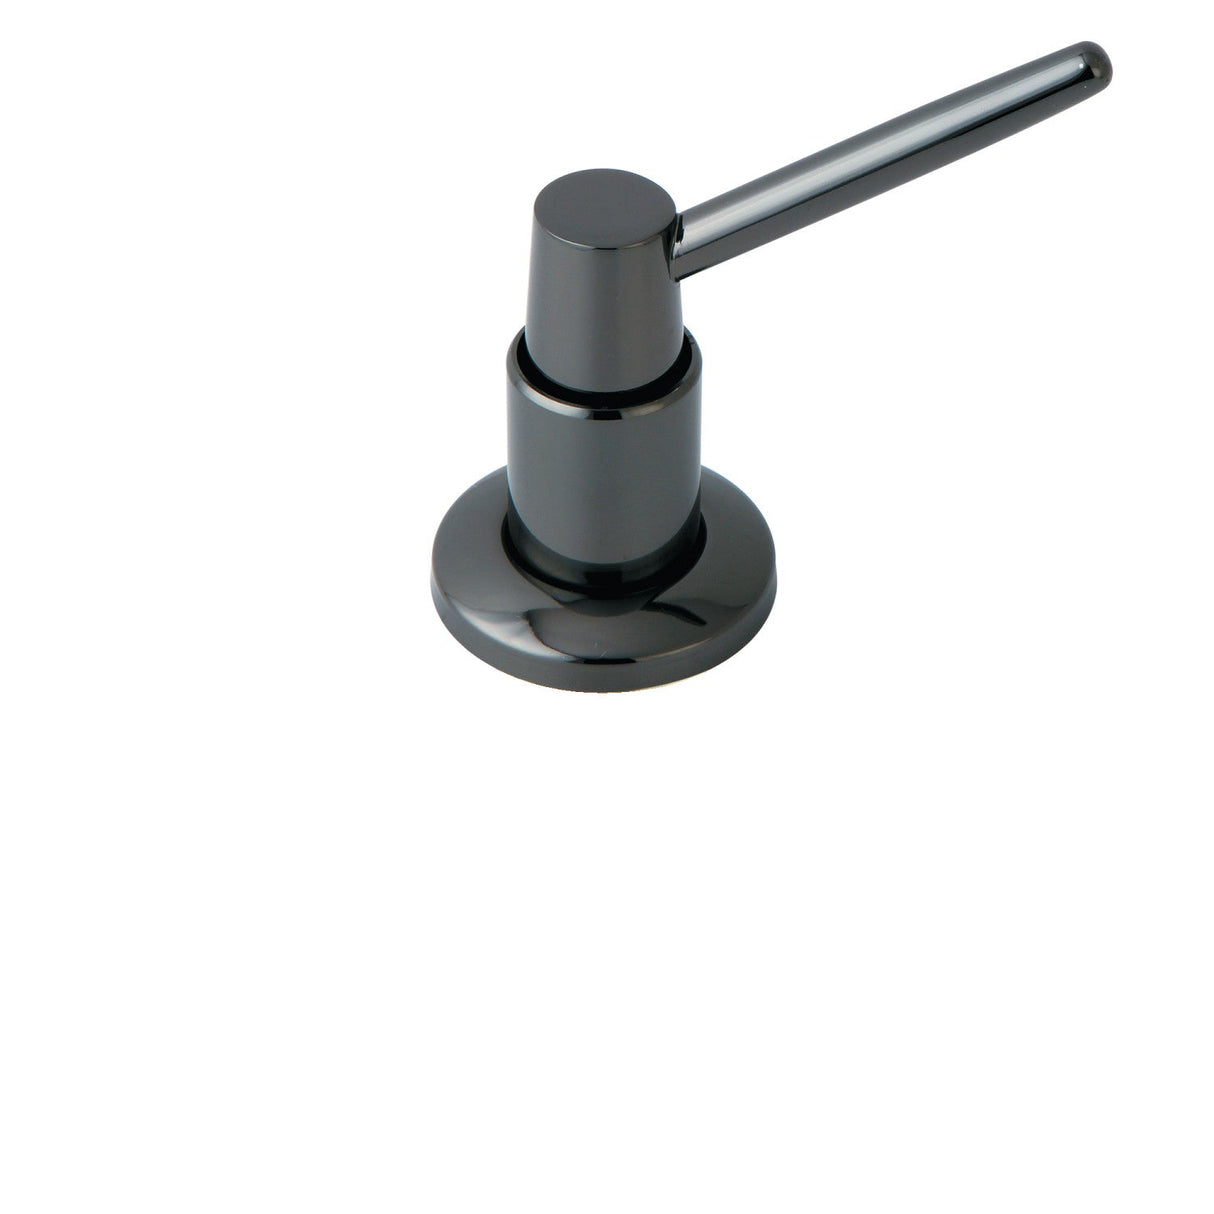 Water Onyx SD8640 Kitchen Soap Dispenser, Black Stainless Steel